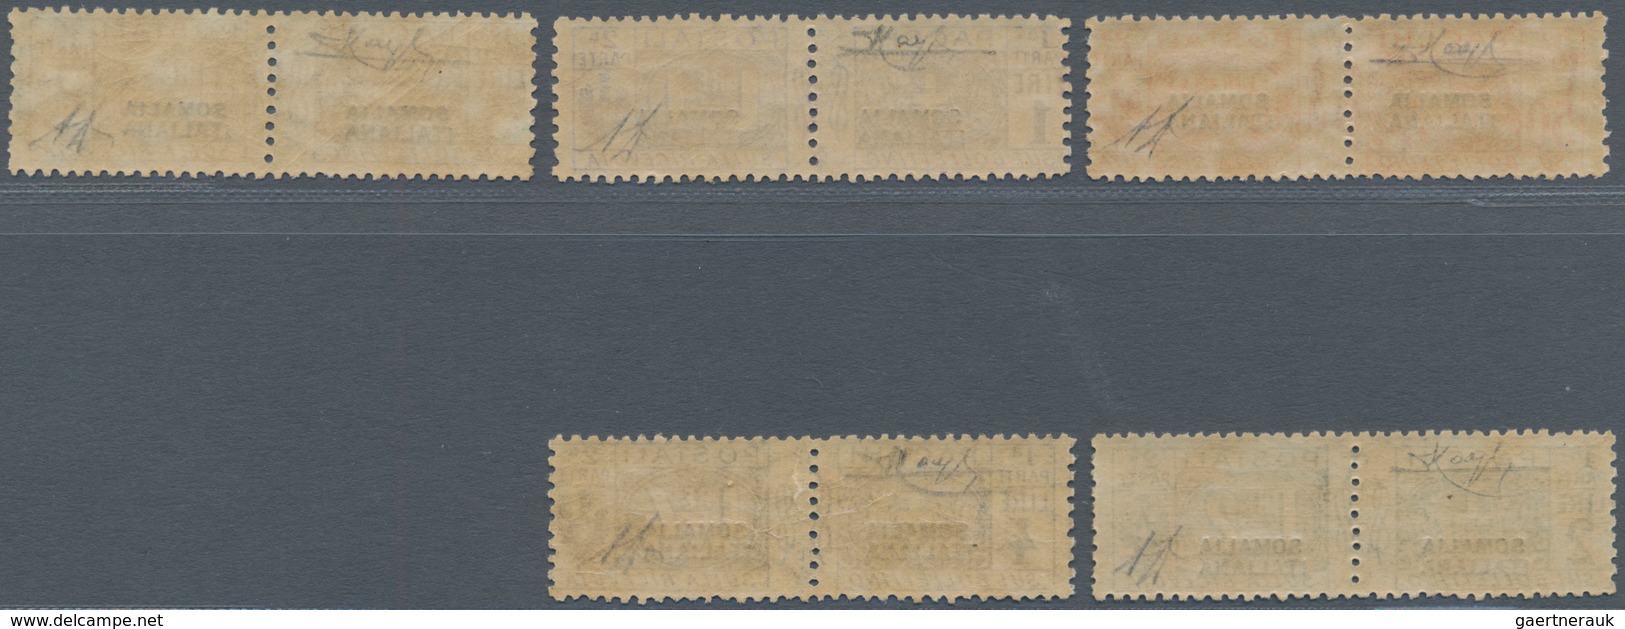 01065 Italienisch-Somaliland - Paketmarken: 1923, "SOMALIA ITALIANA" Overprint On 50c. To 4l., Not Issued, - Somalië